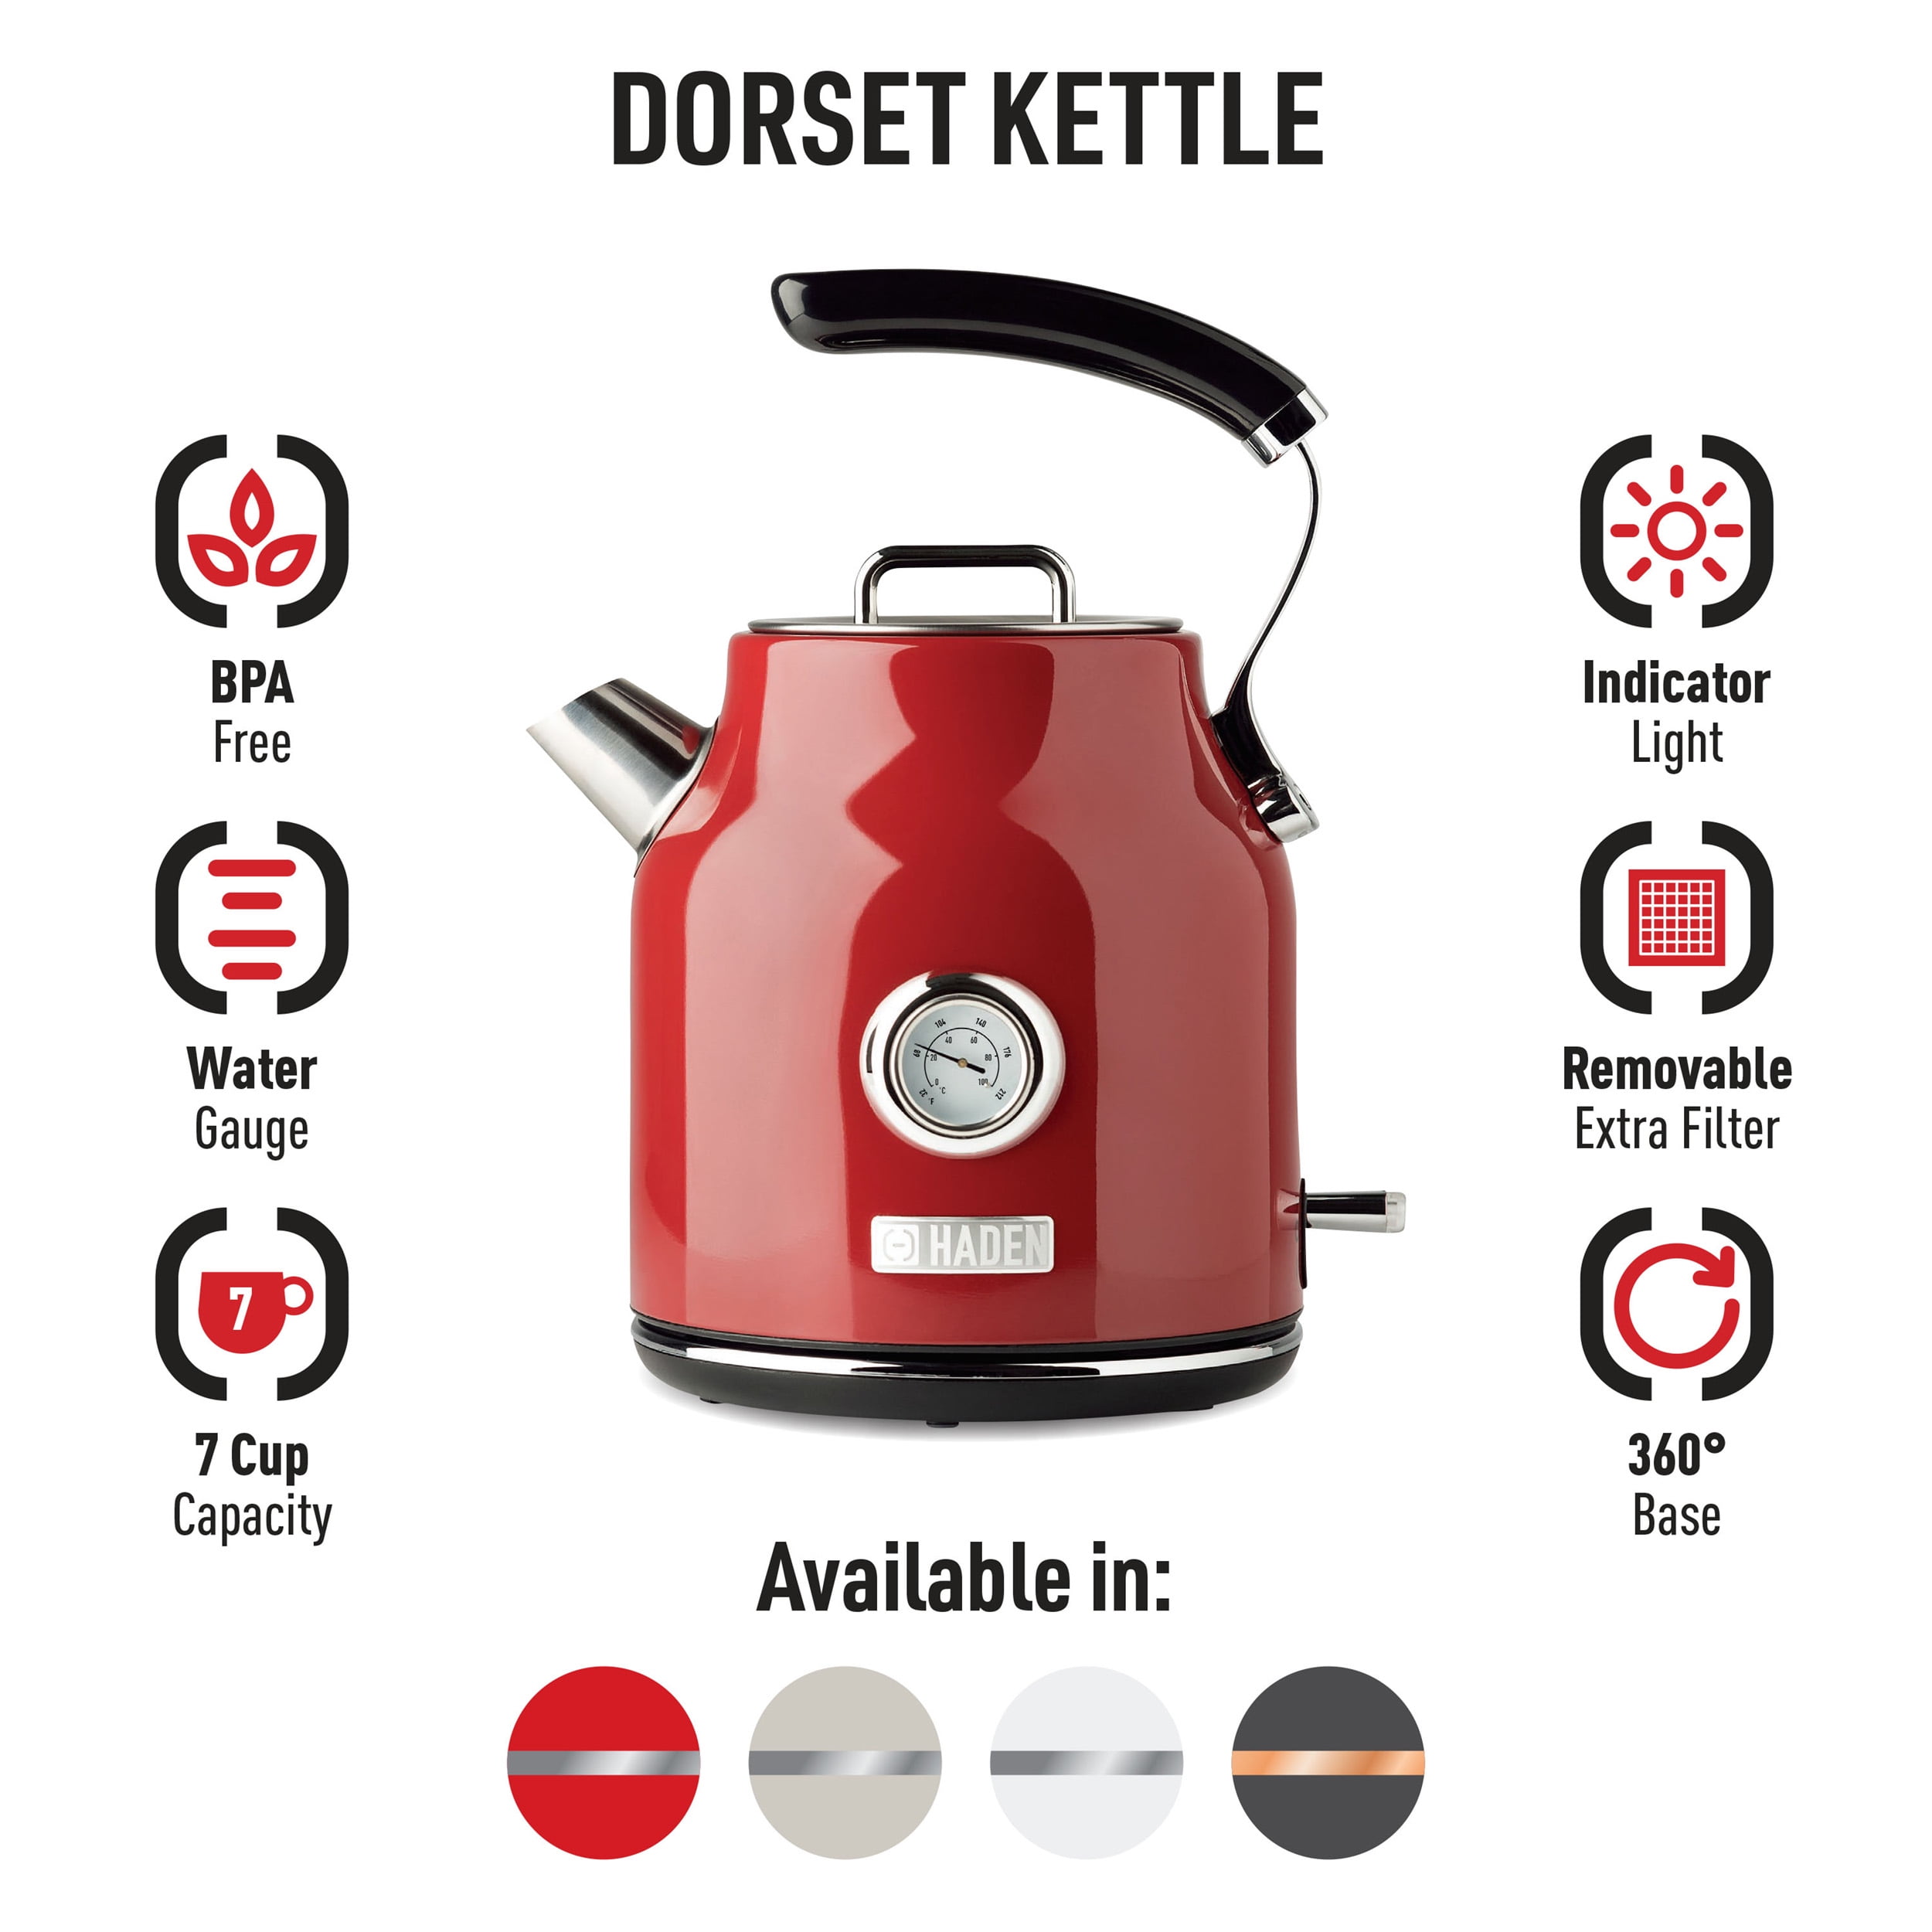 HADEN Dorset Red Electric Tea Kettle + Reviews